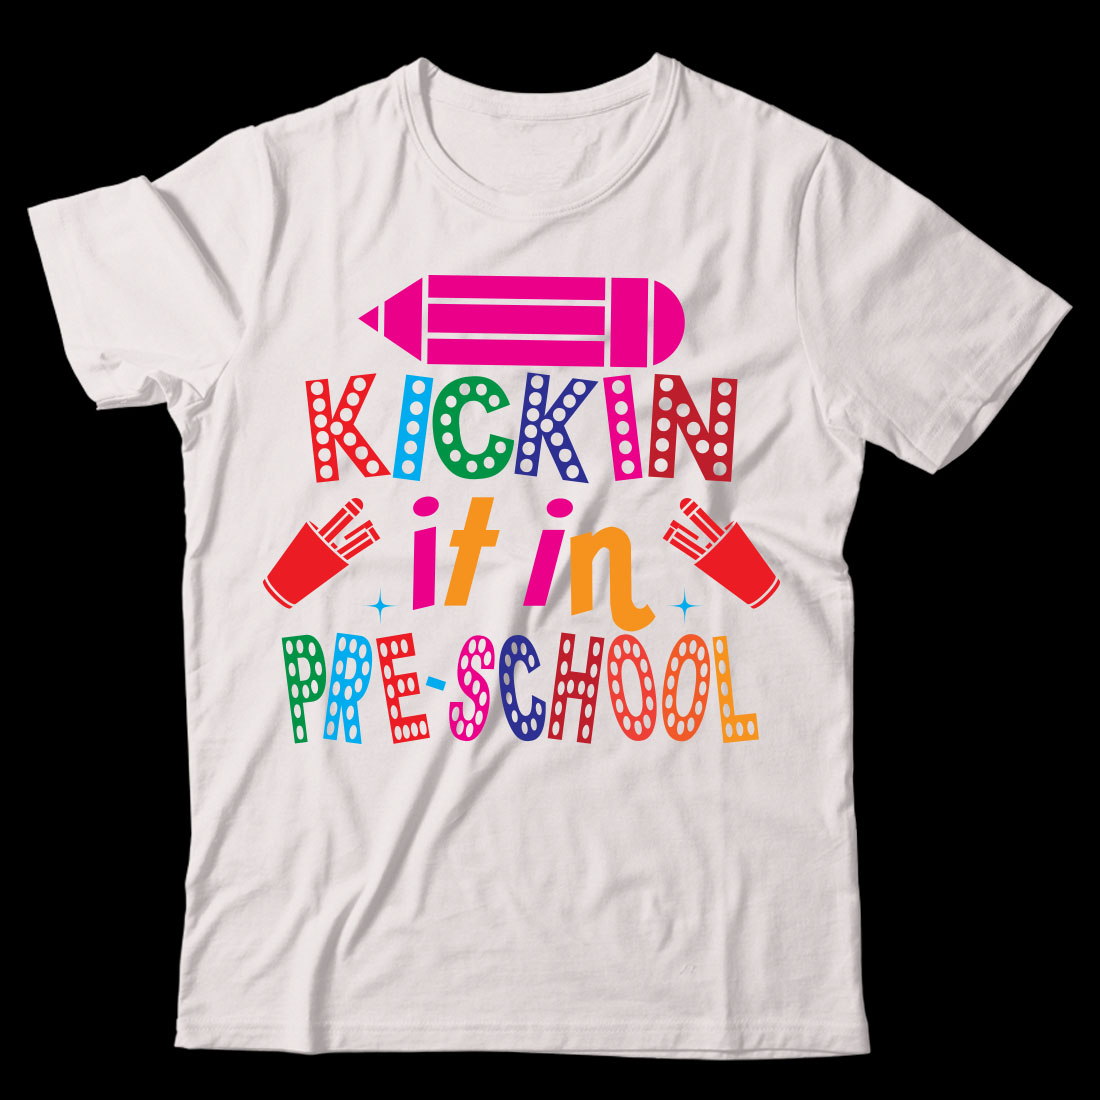 T - shirt that says kickin'in preschool.